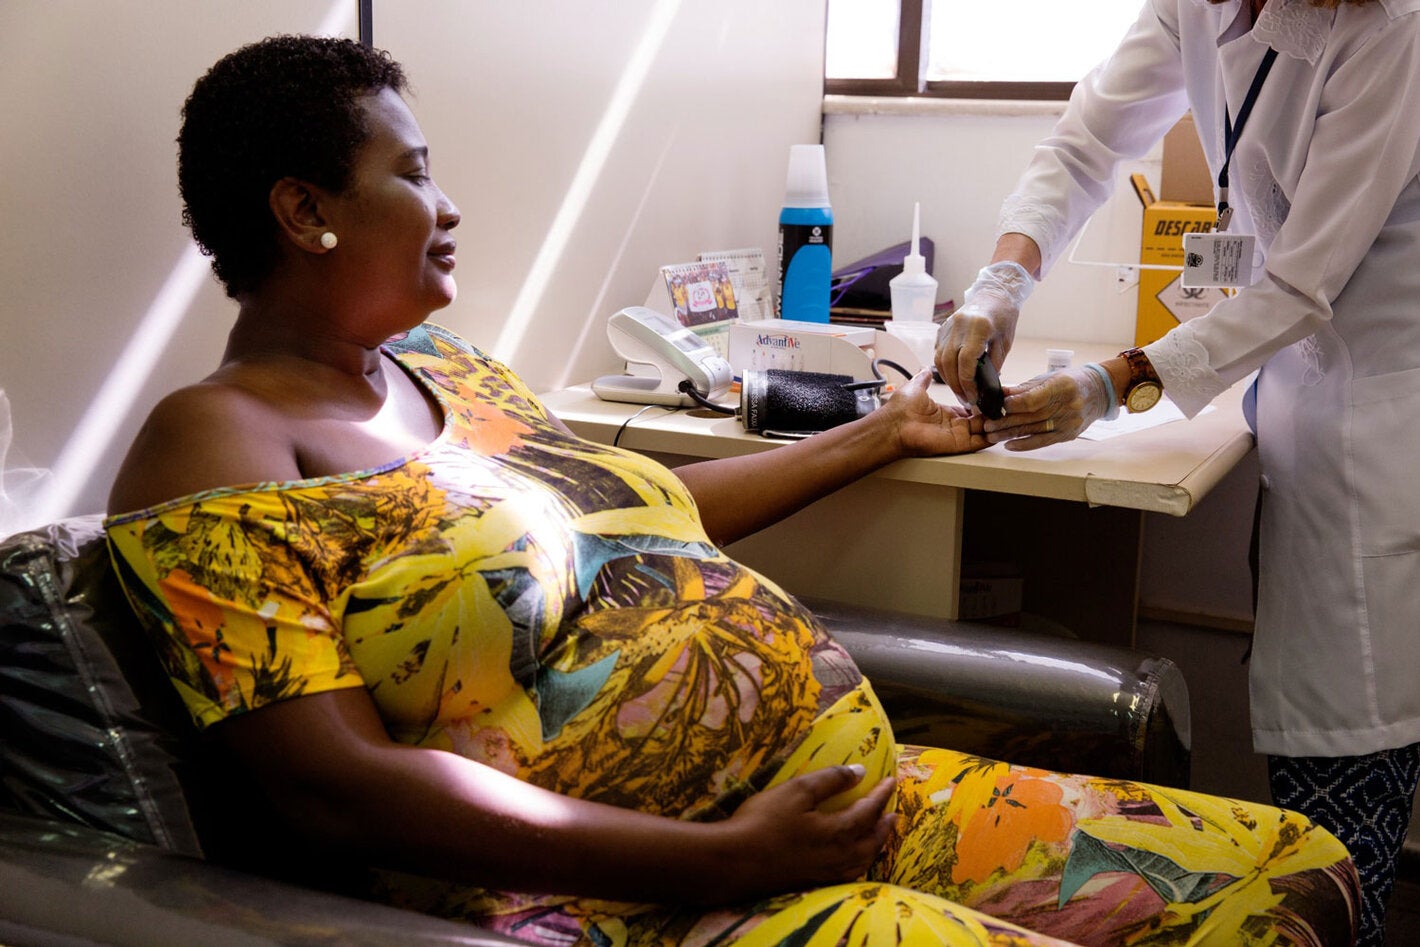 Maternal health visit